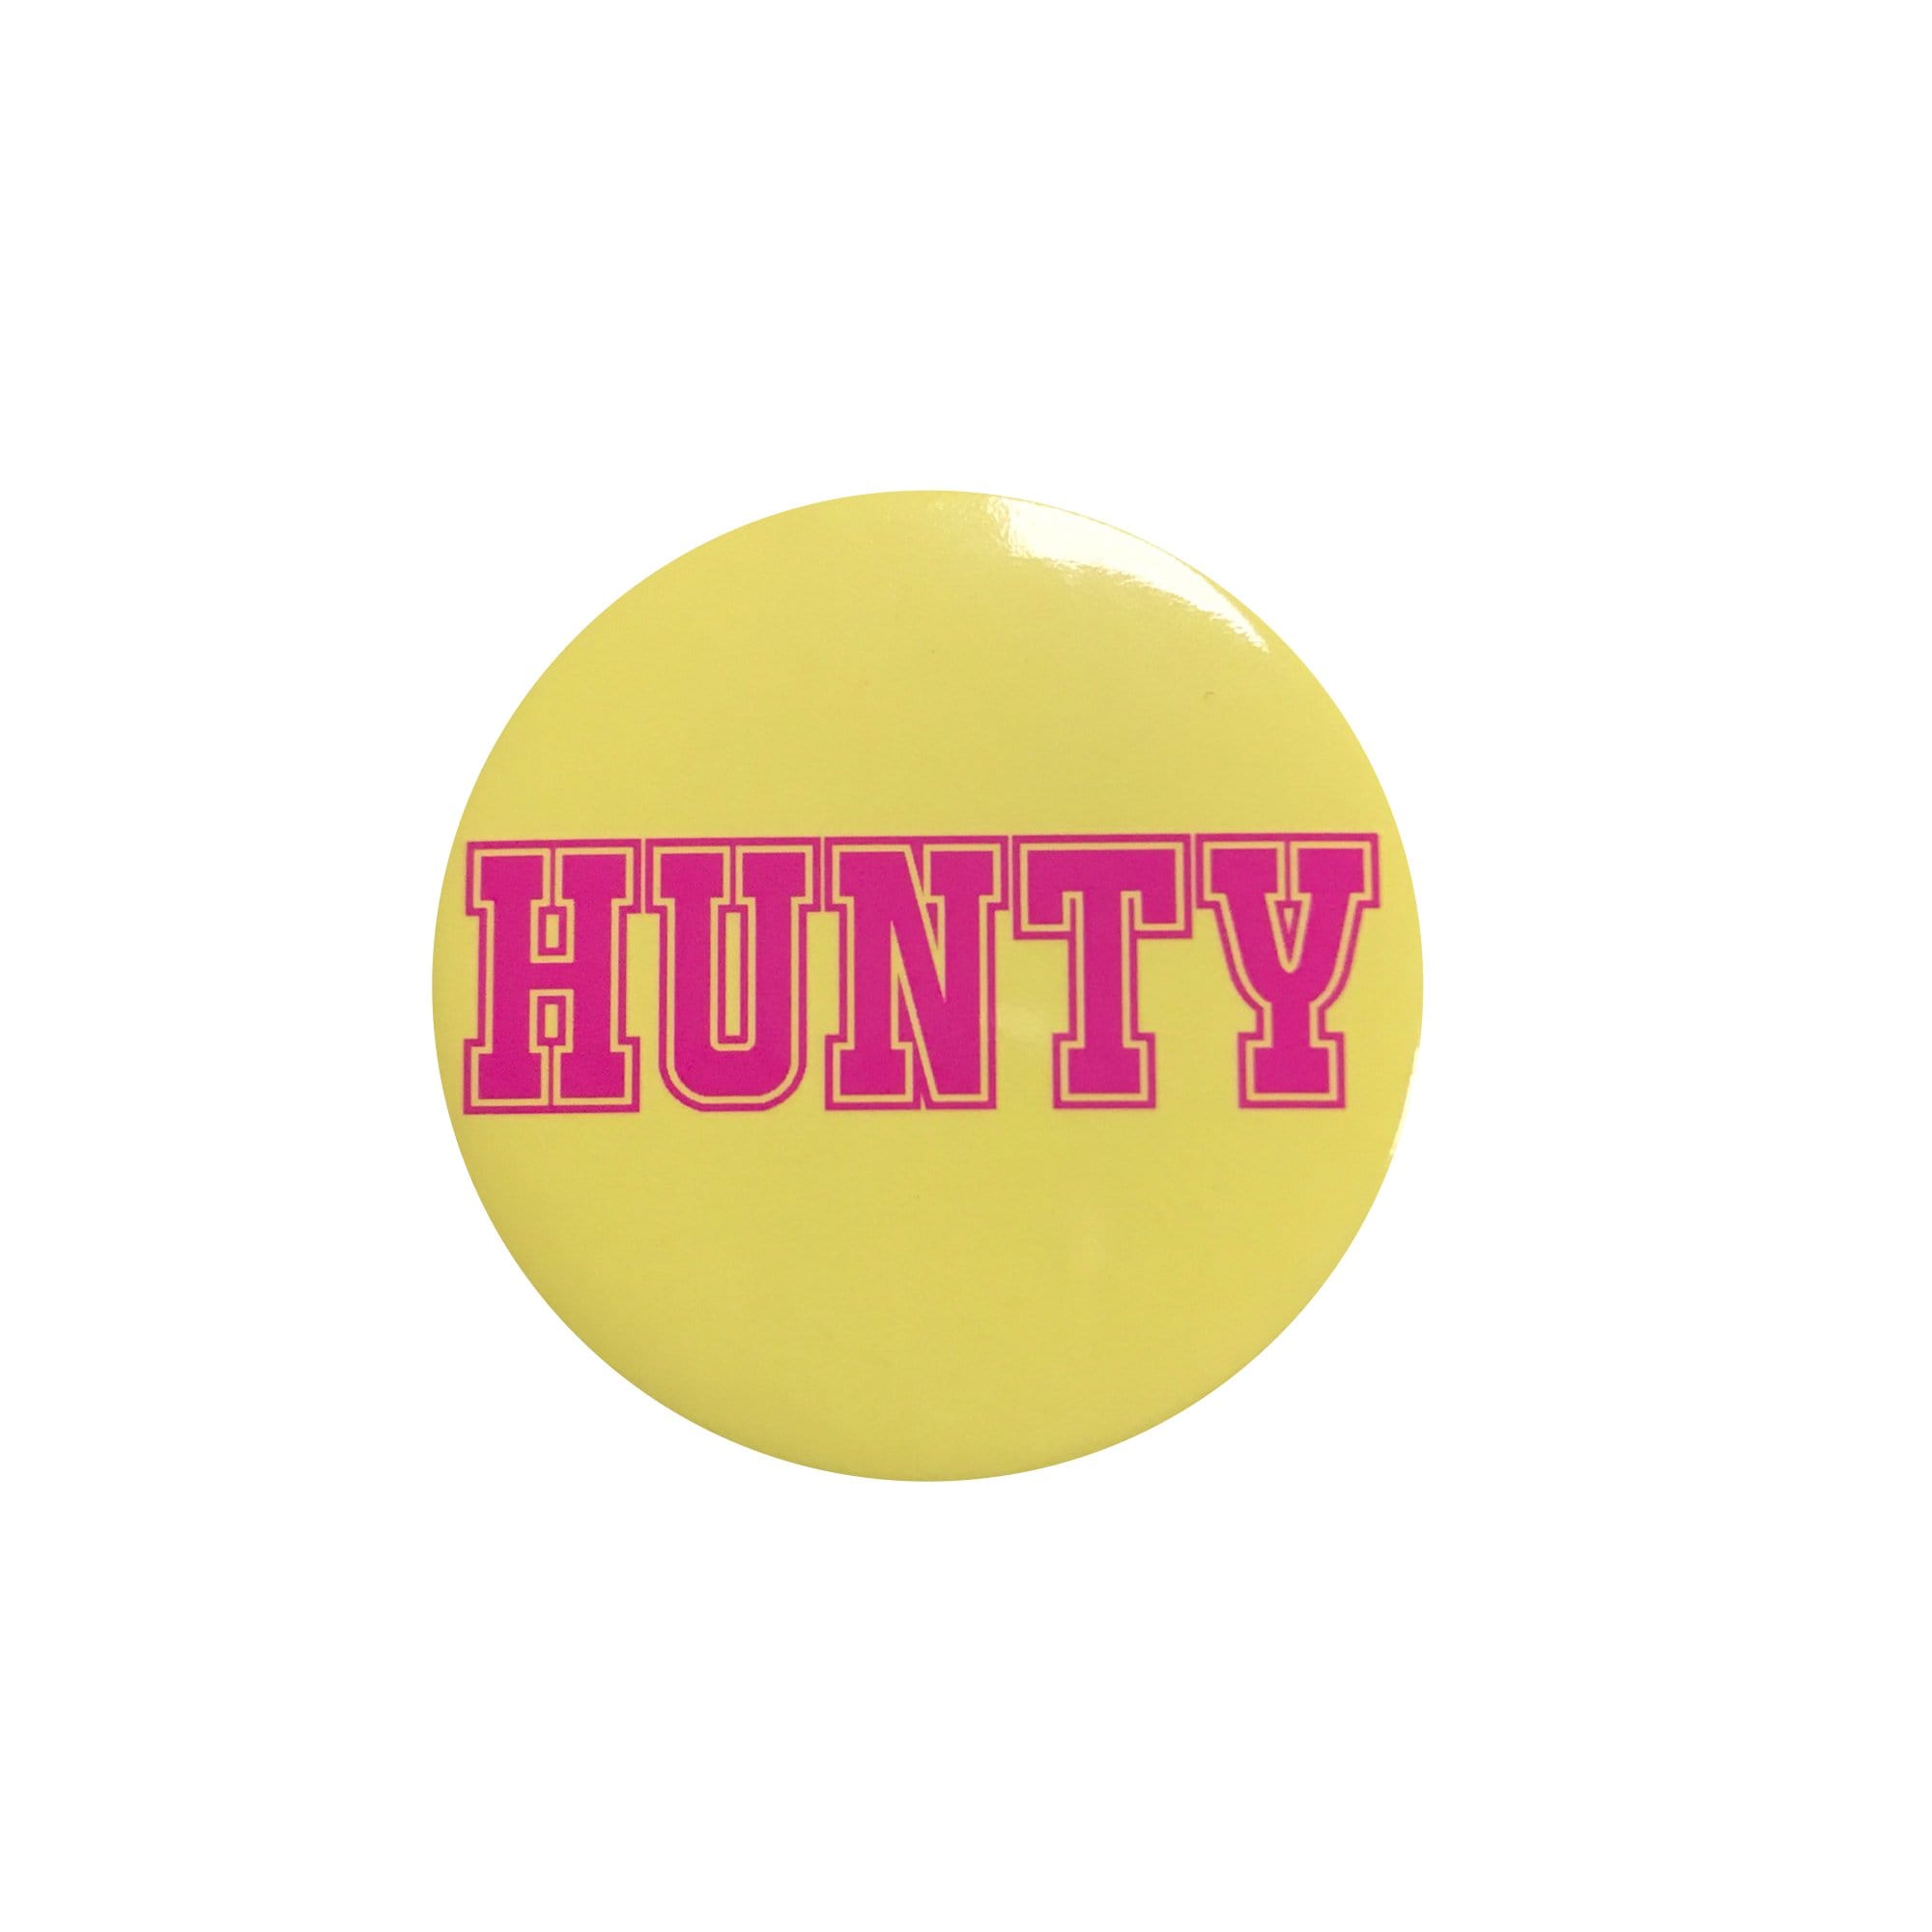 pinbuds Sassy Drag Button Badges (4 Pack)